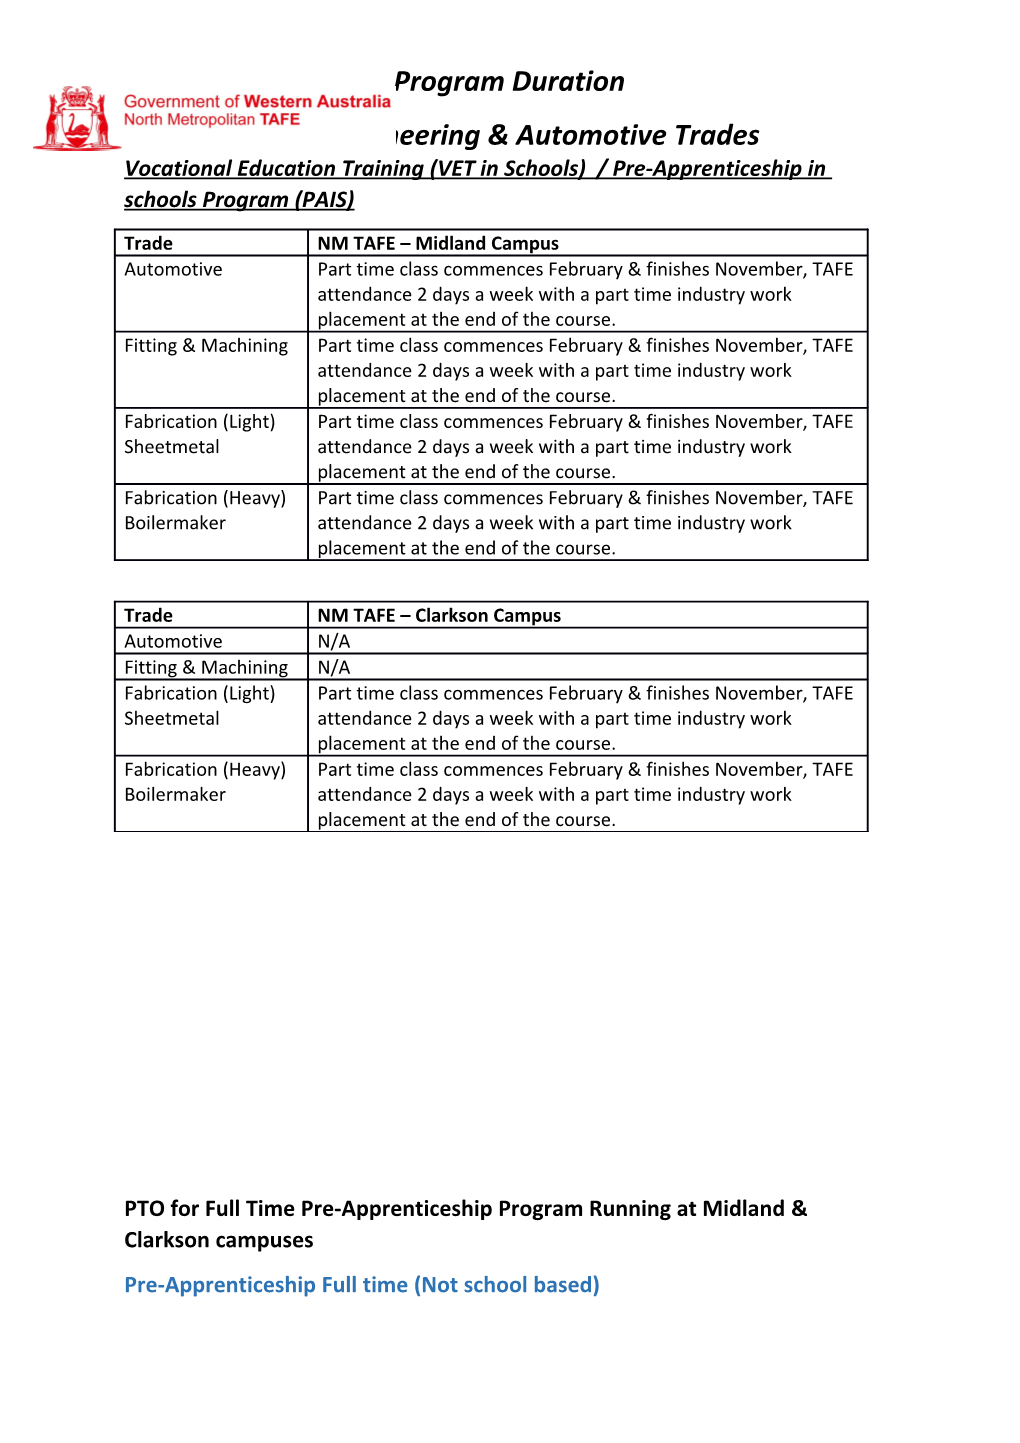 Vocational Education Training (VET in Schools) /Pre-Apprenticeship in Schools Program (PAIS)